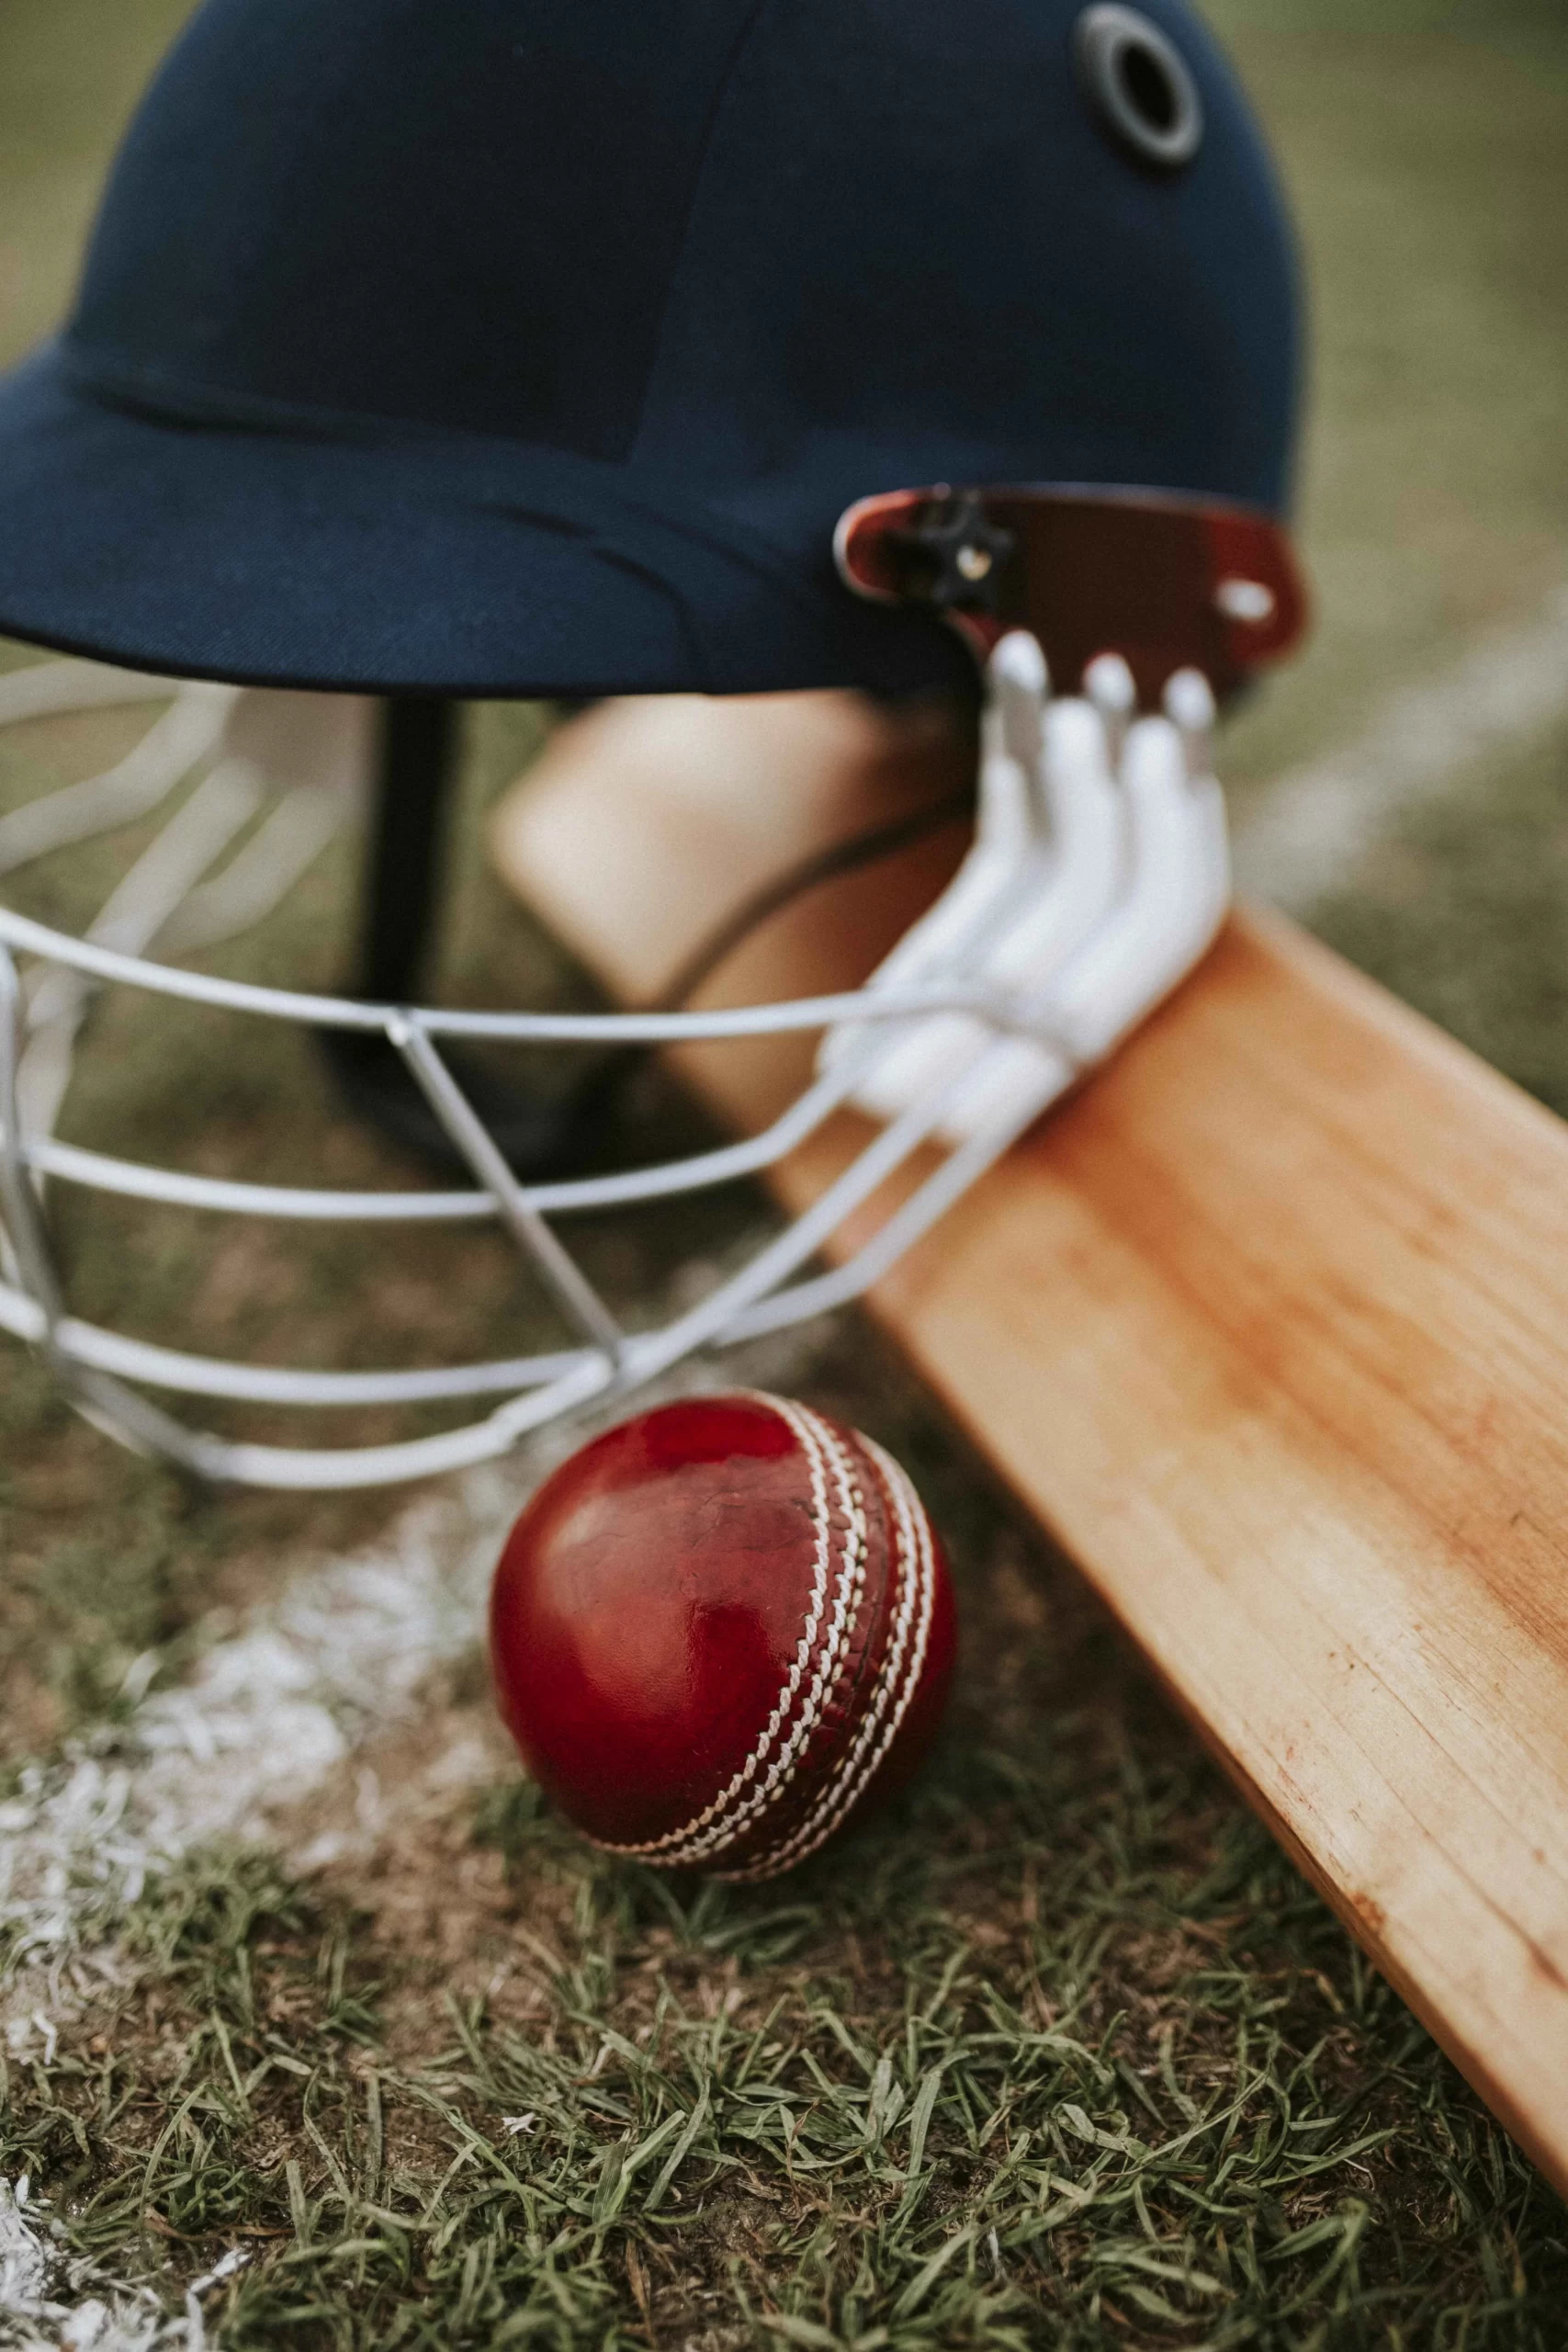 Rachin Ravindra: The Rising Star of New Zealand Cricket